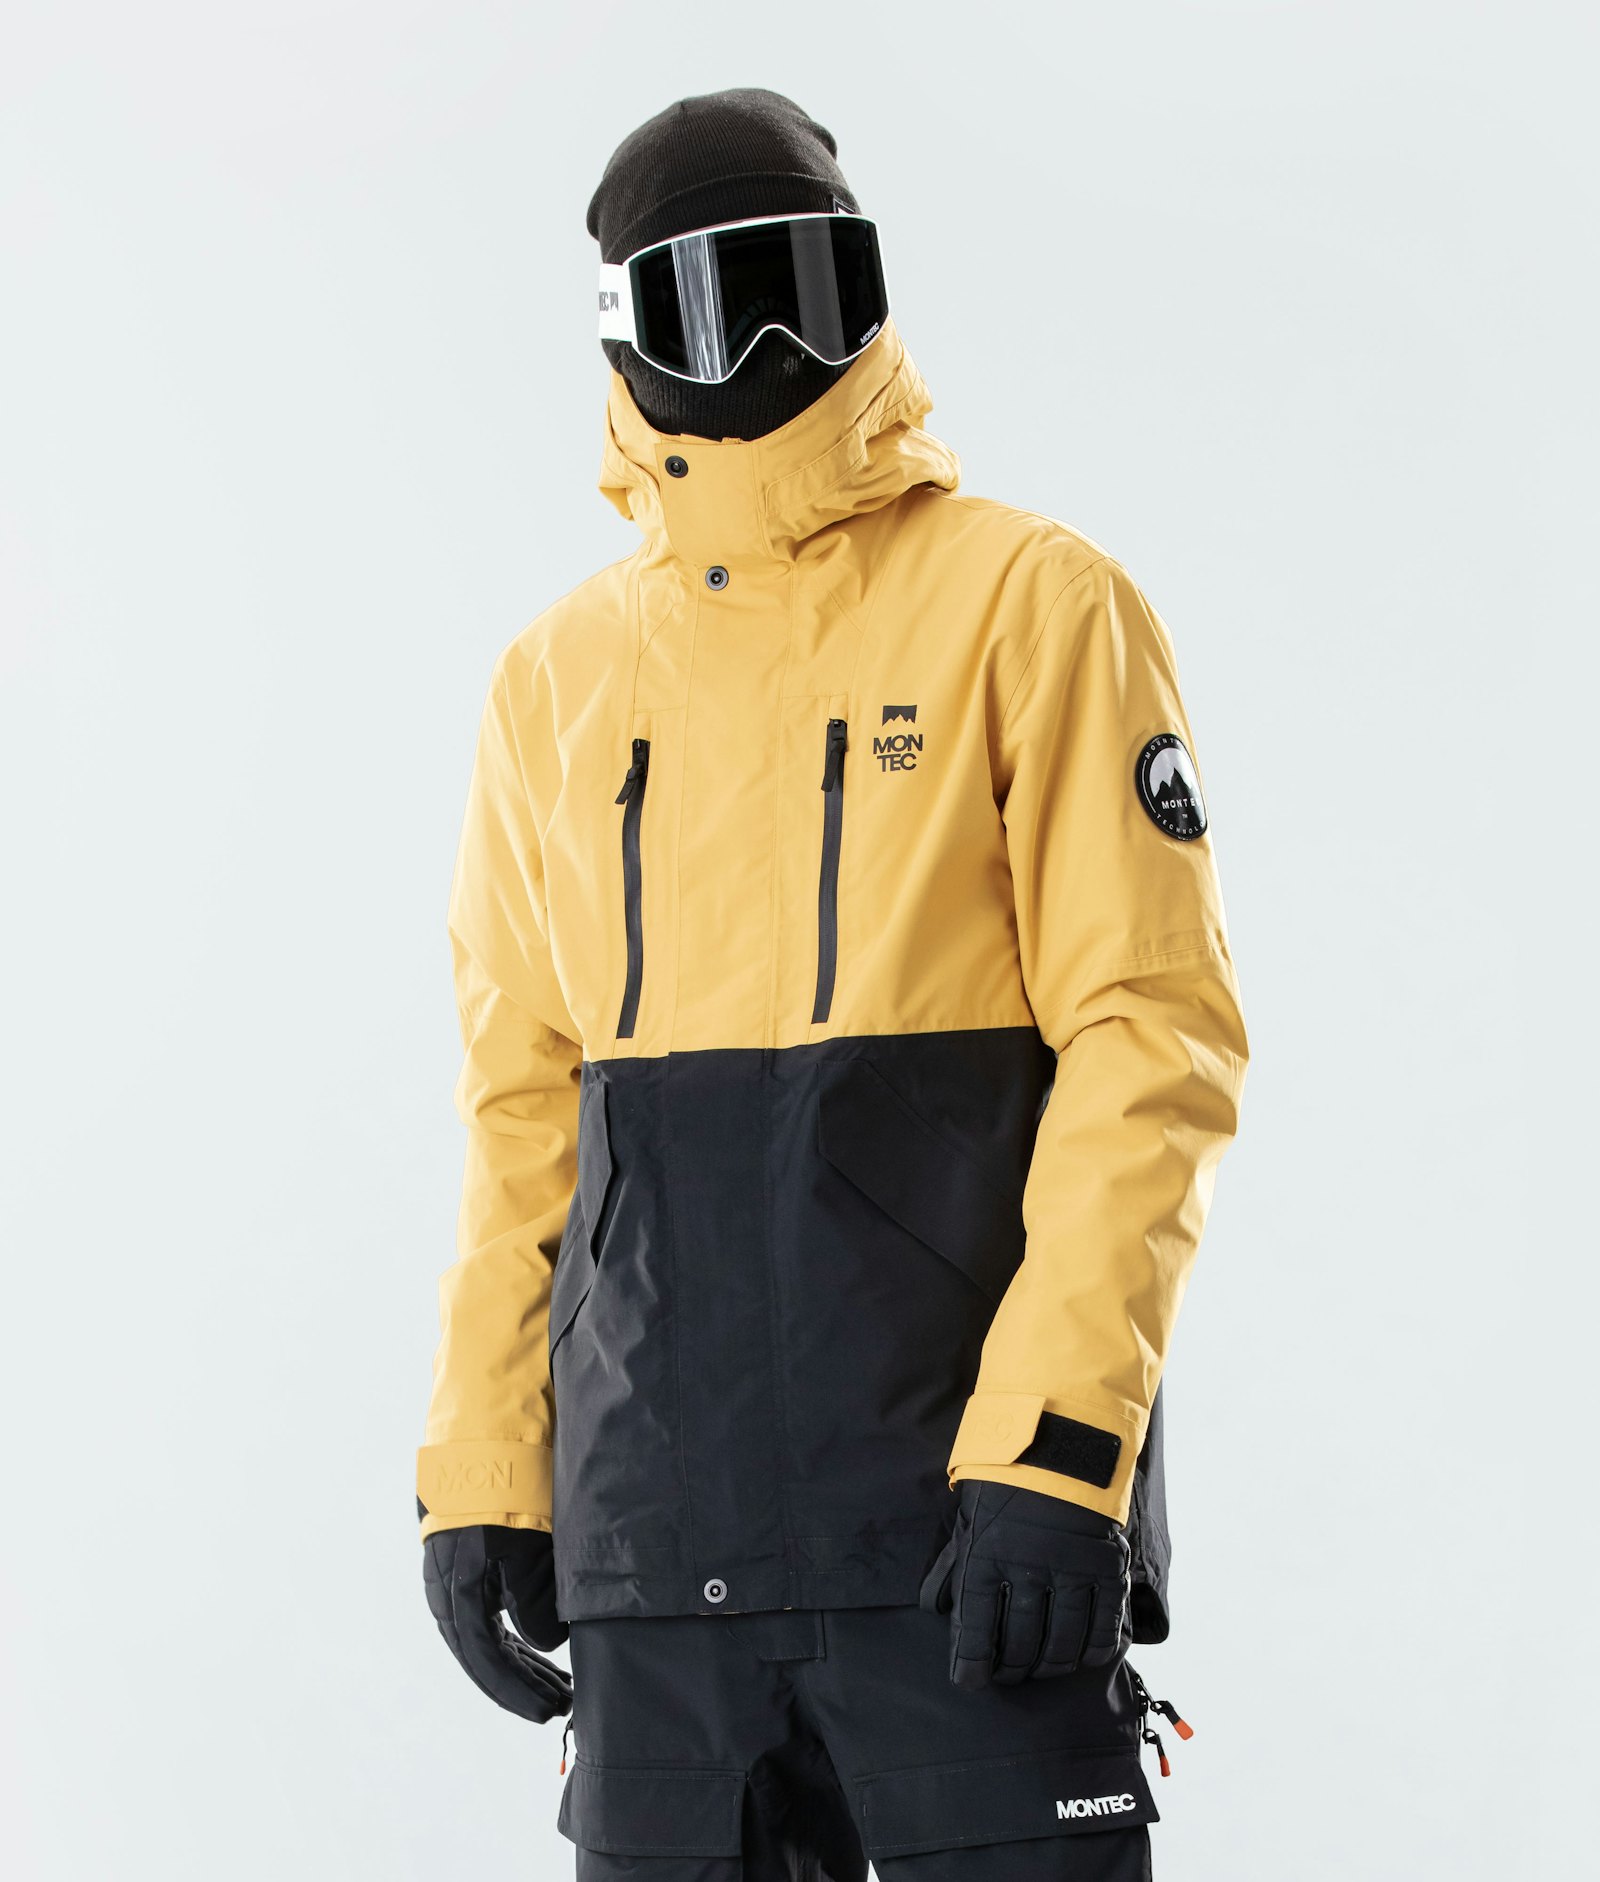 Roc Veste Snowboard Homme Yellow/Black